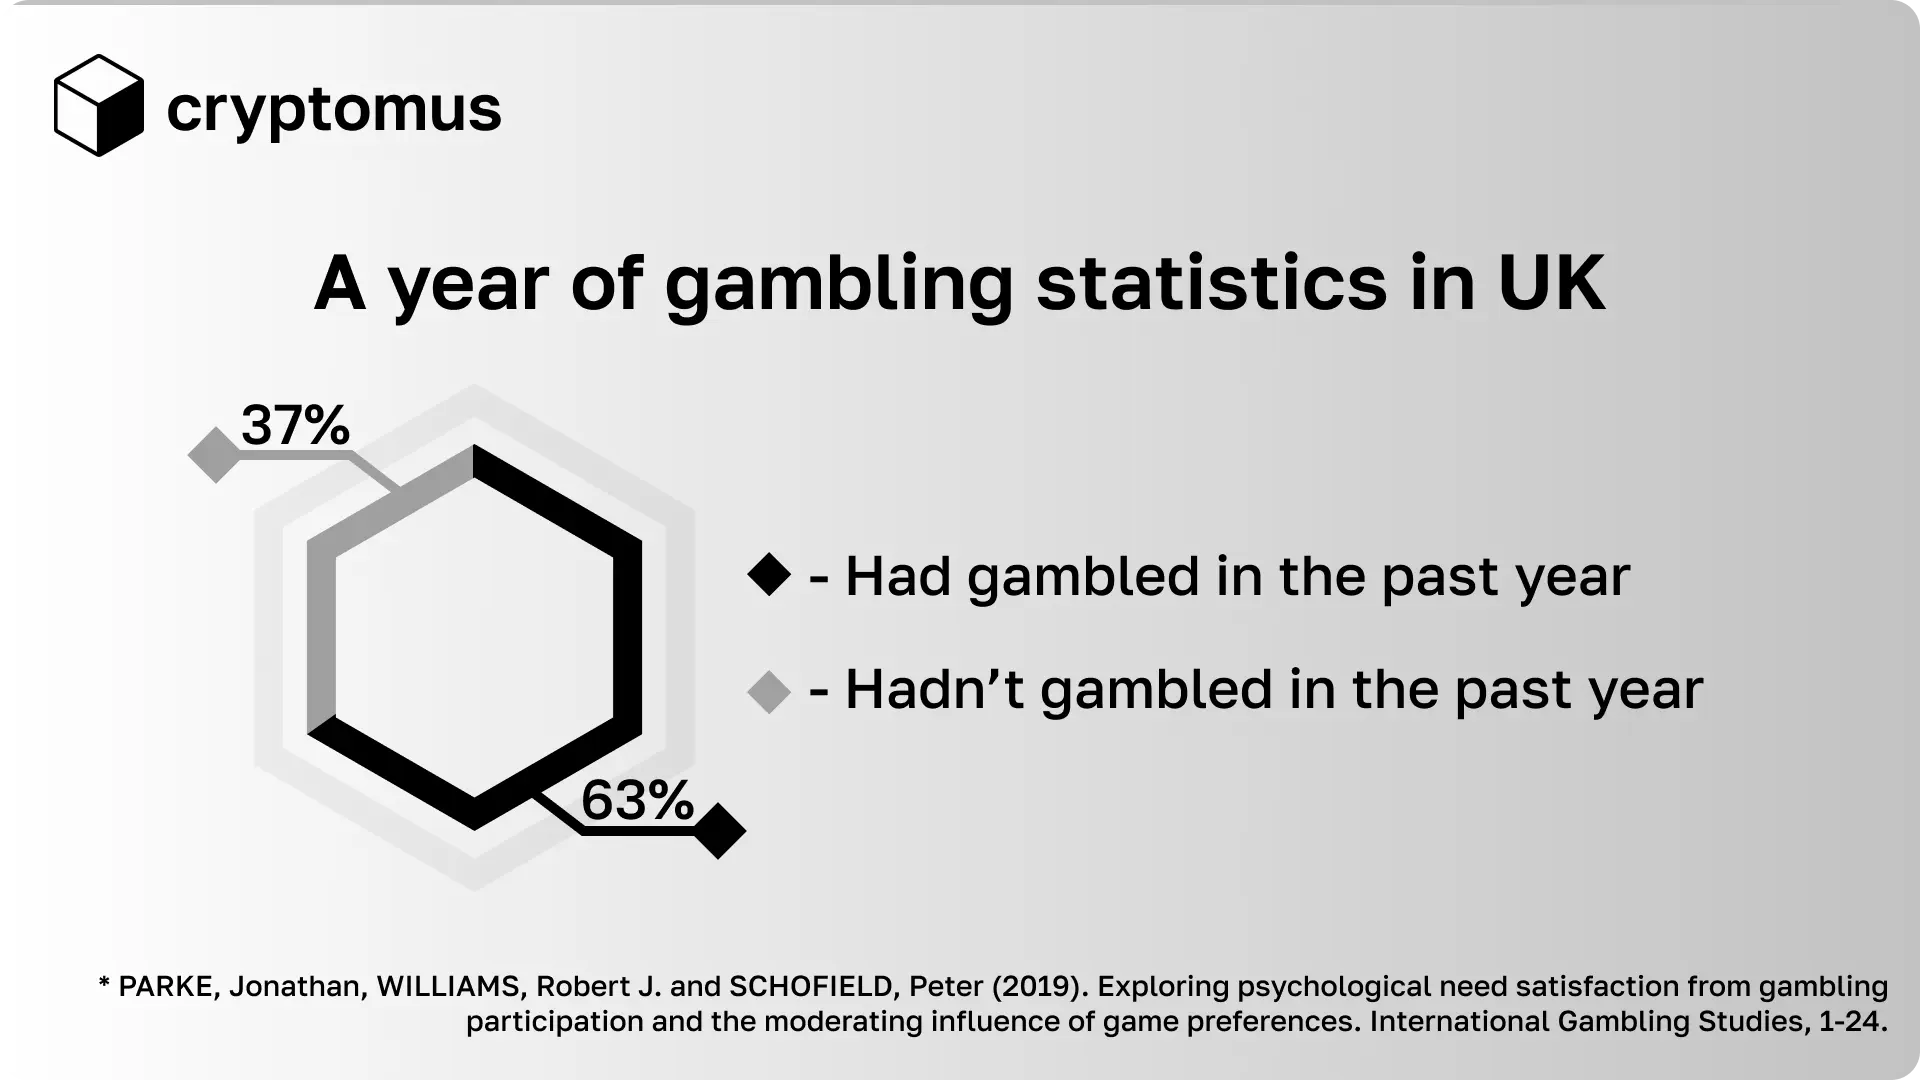 A year of gambling in UK